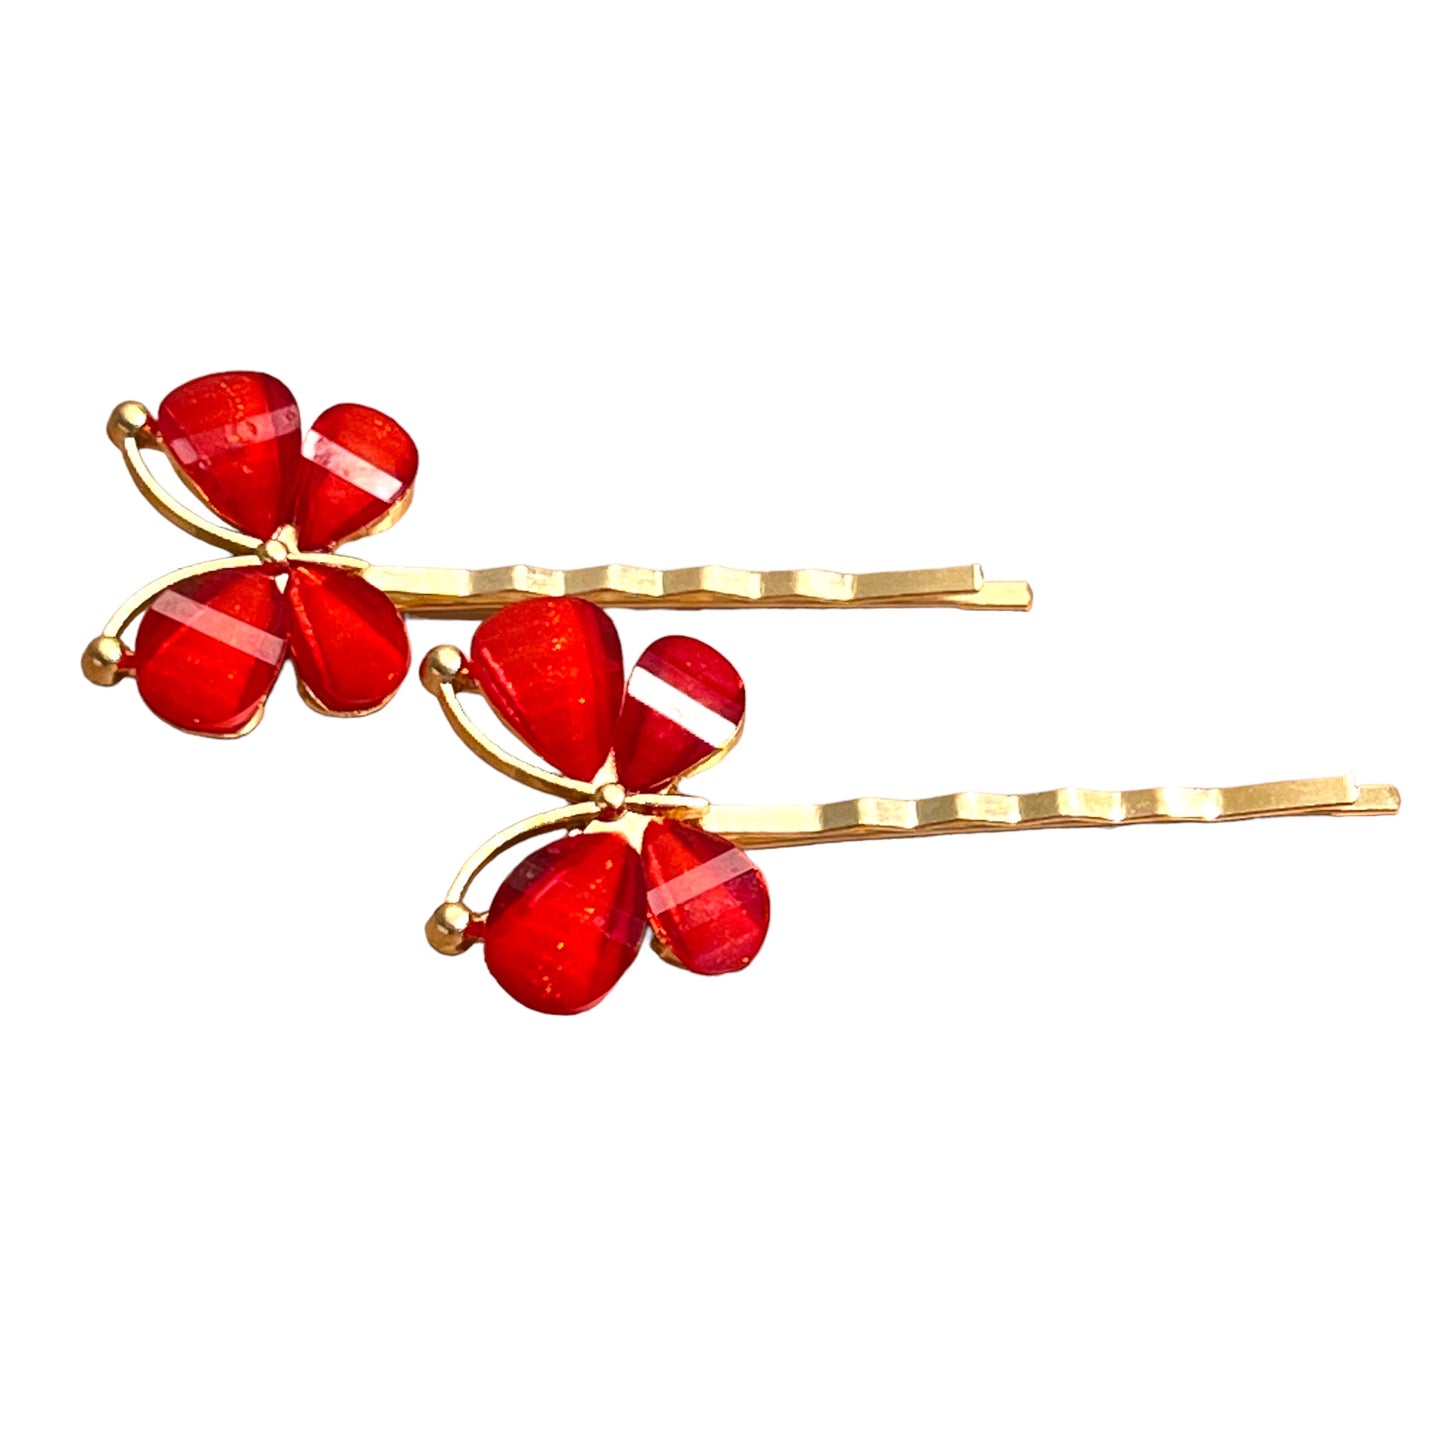 Red Rhinestone Butterfly Hair Pins - Elegant & Vibrant Hair Accessories